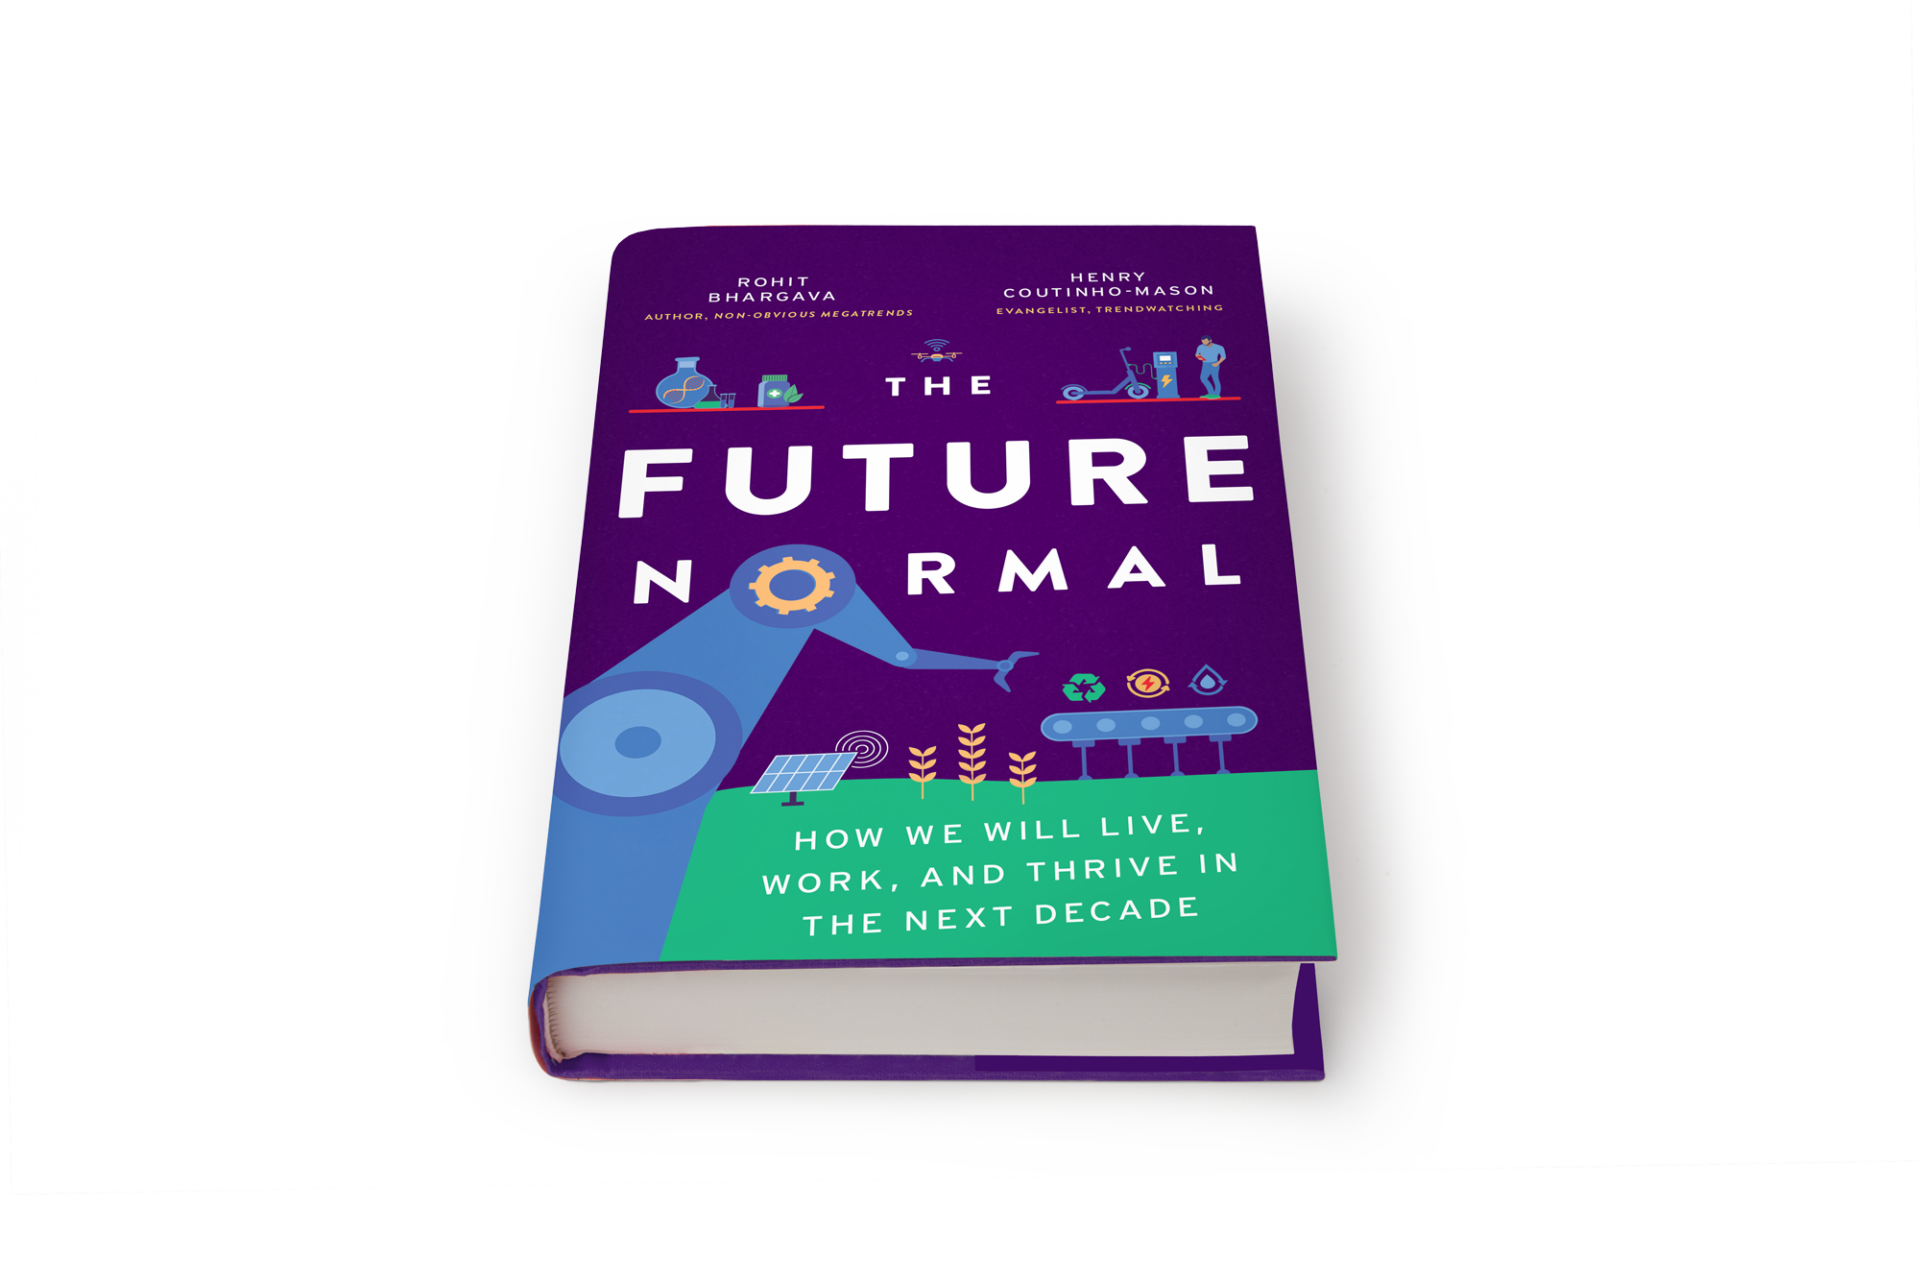 The Future Normal - Trends Futurist DJ 5-2